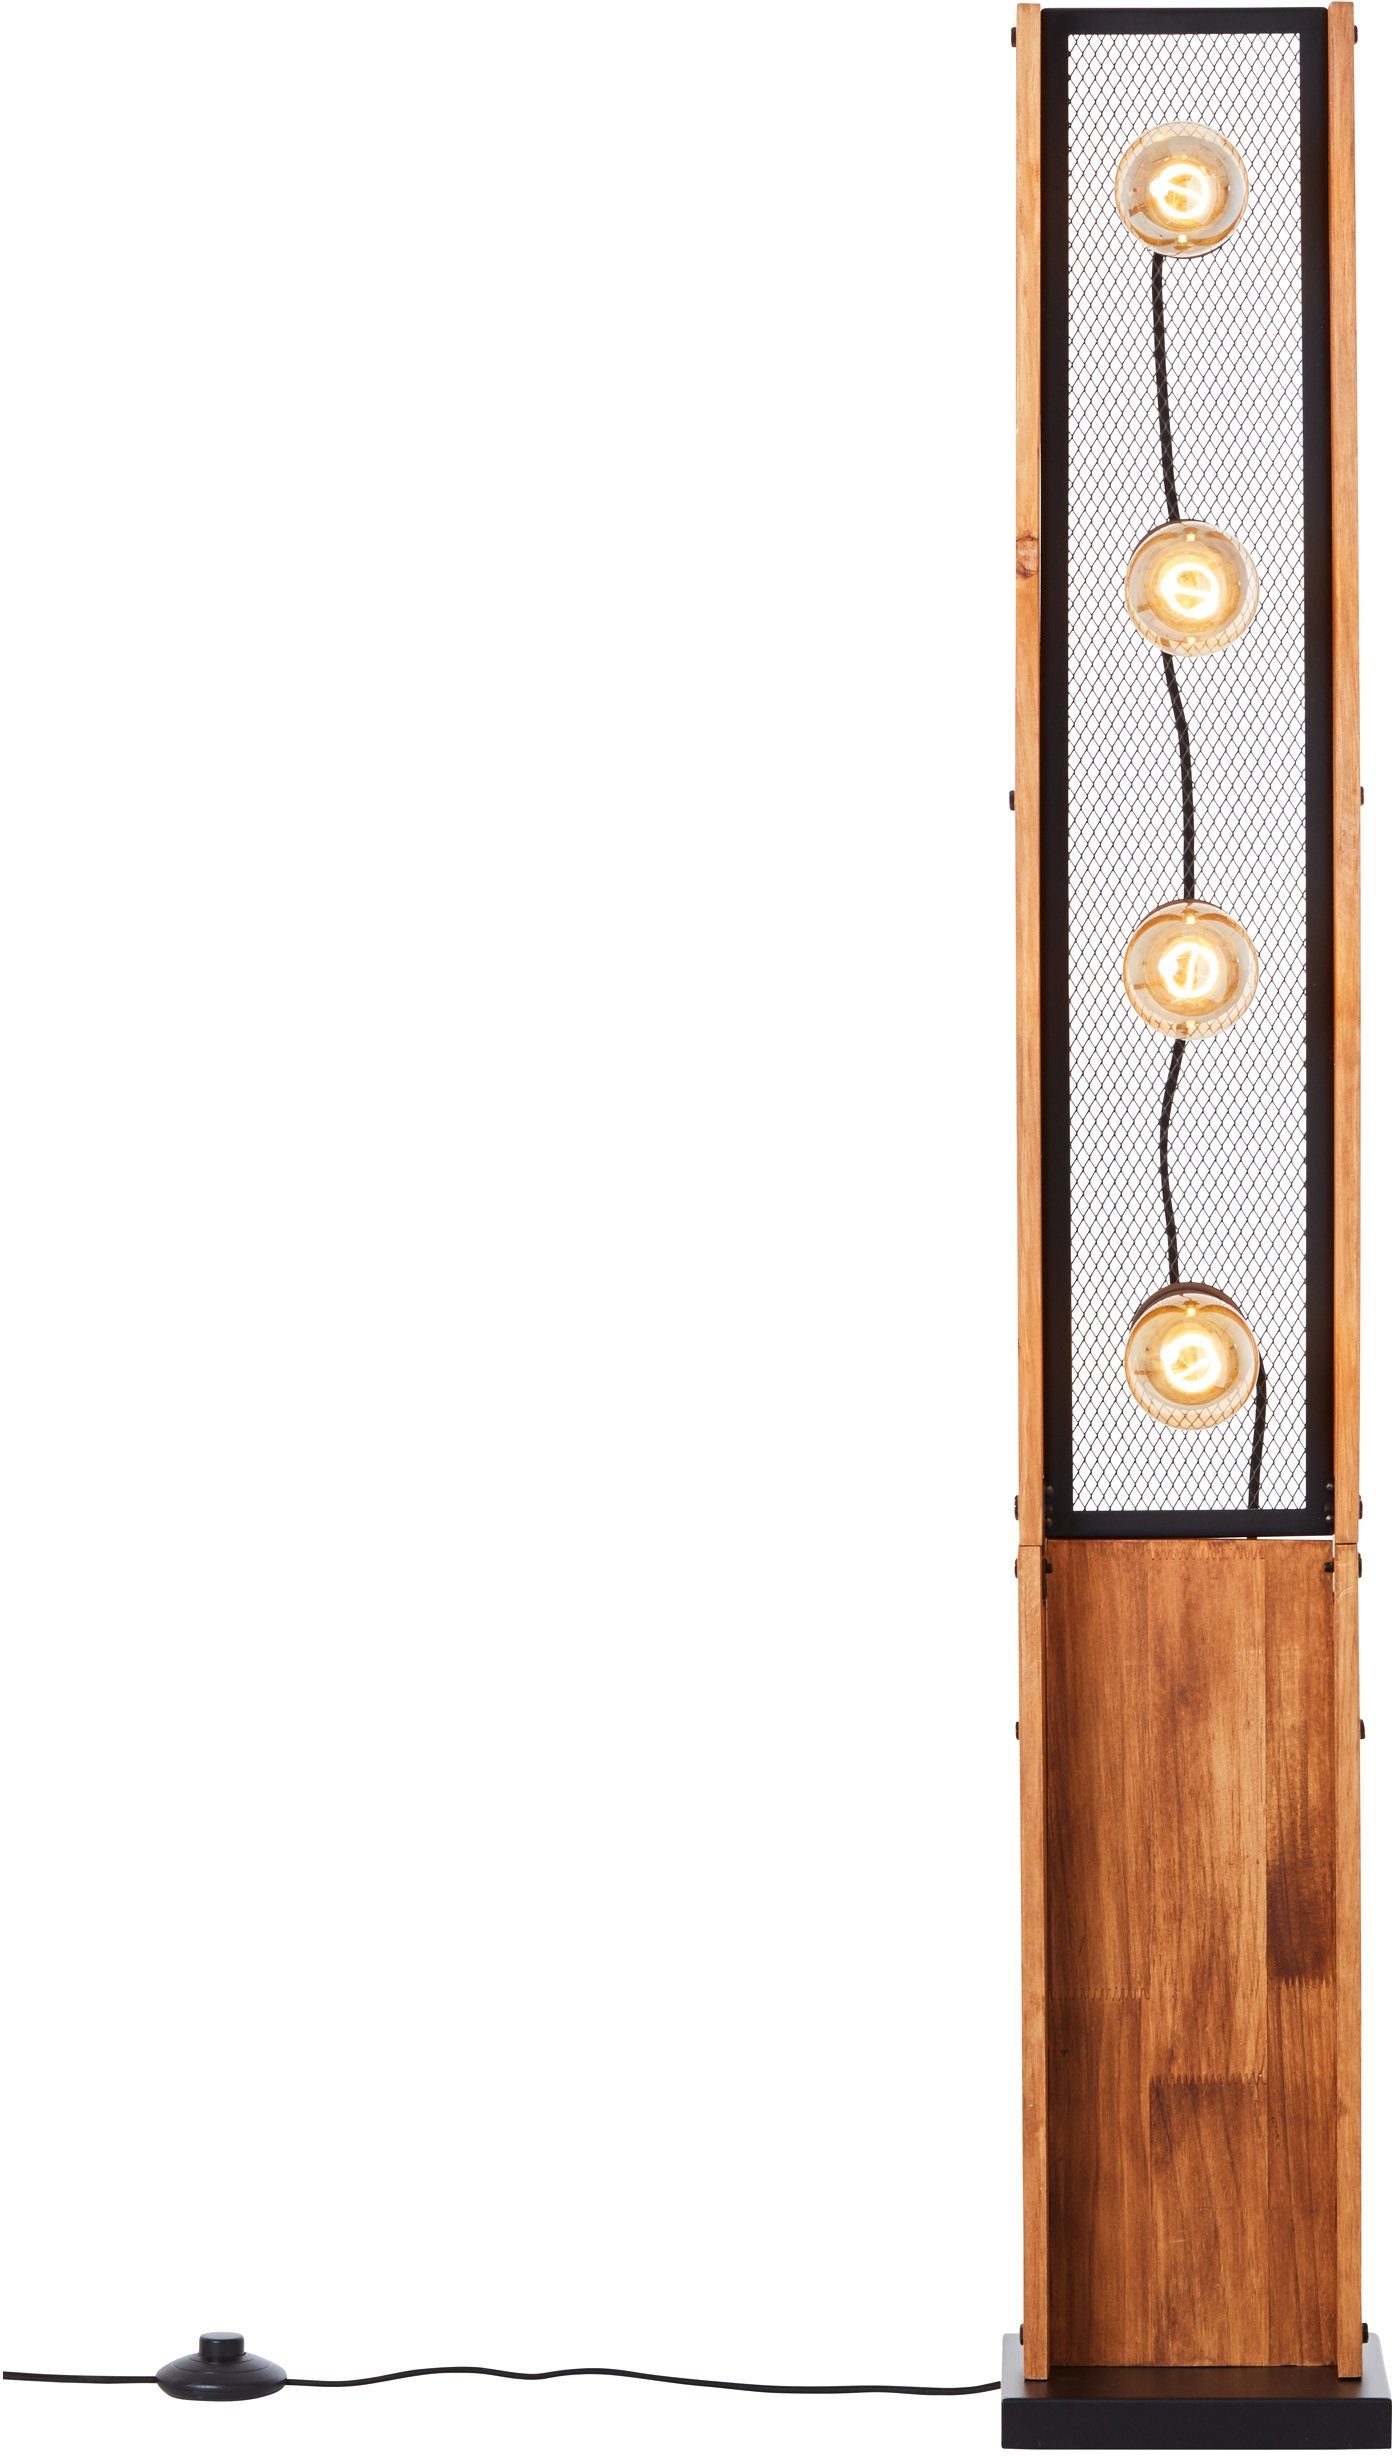 Brilliant Stehlampe Calandra, ohne Leuchtmittel, 20 x 125,5 schwarz/holz cm, x 20 E27, 4 x Metall/Holz